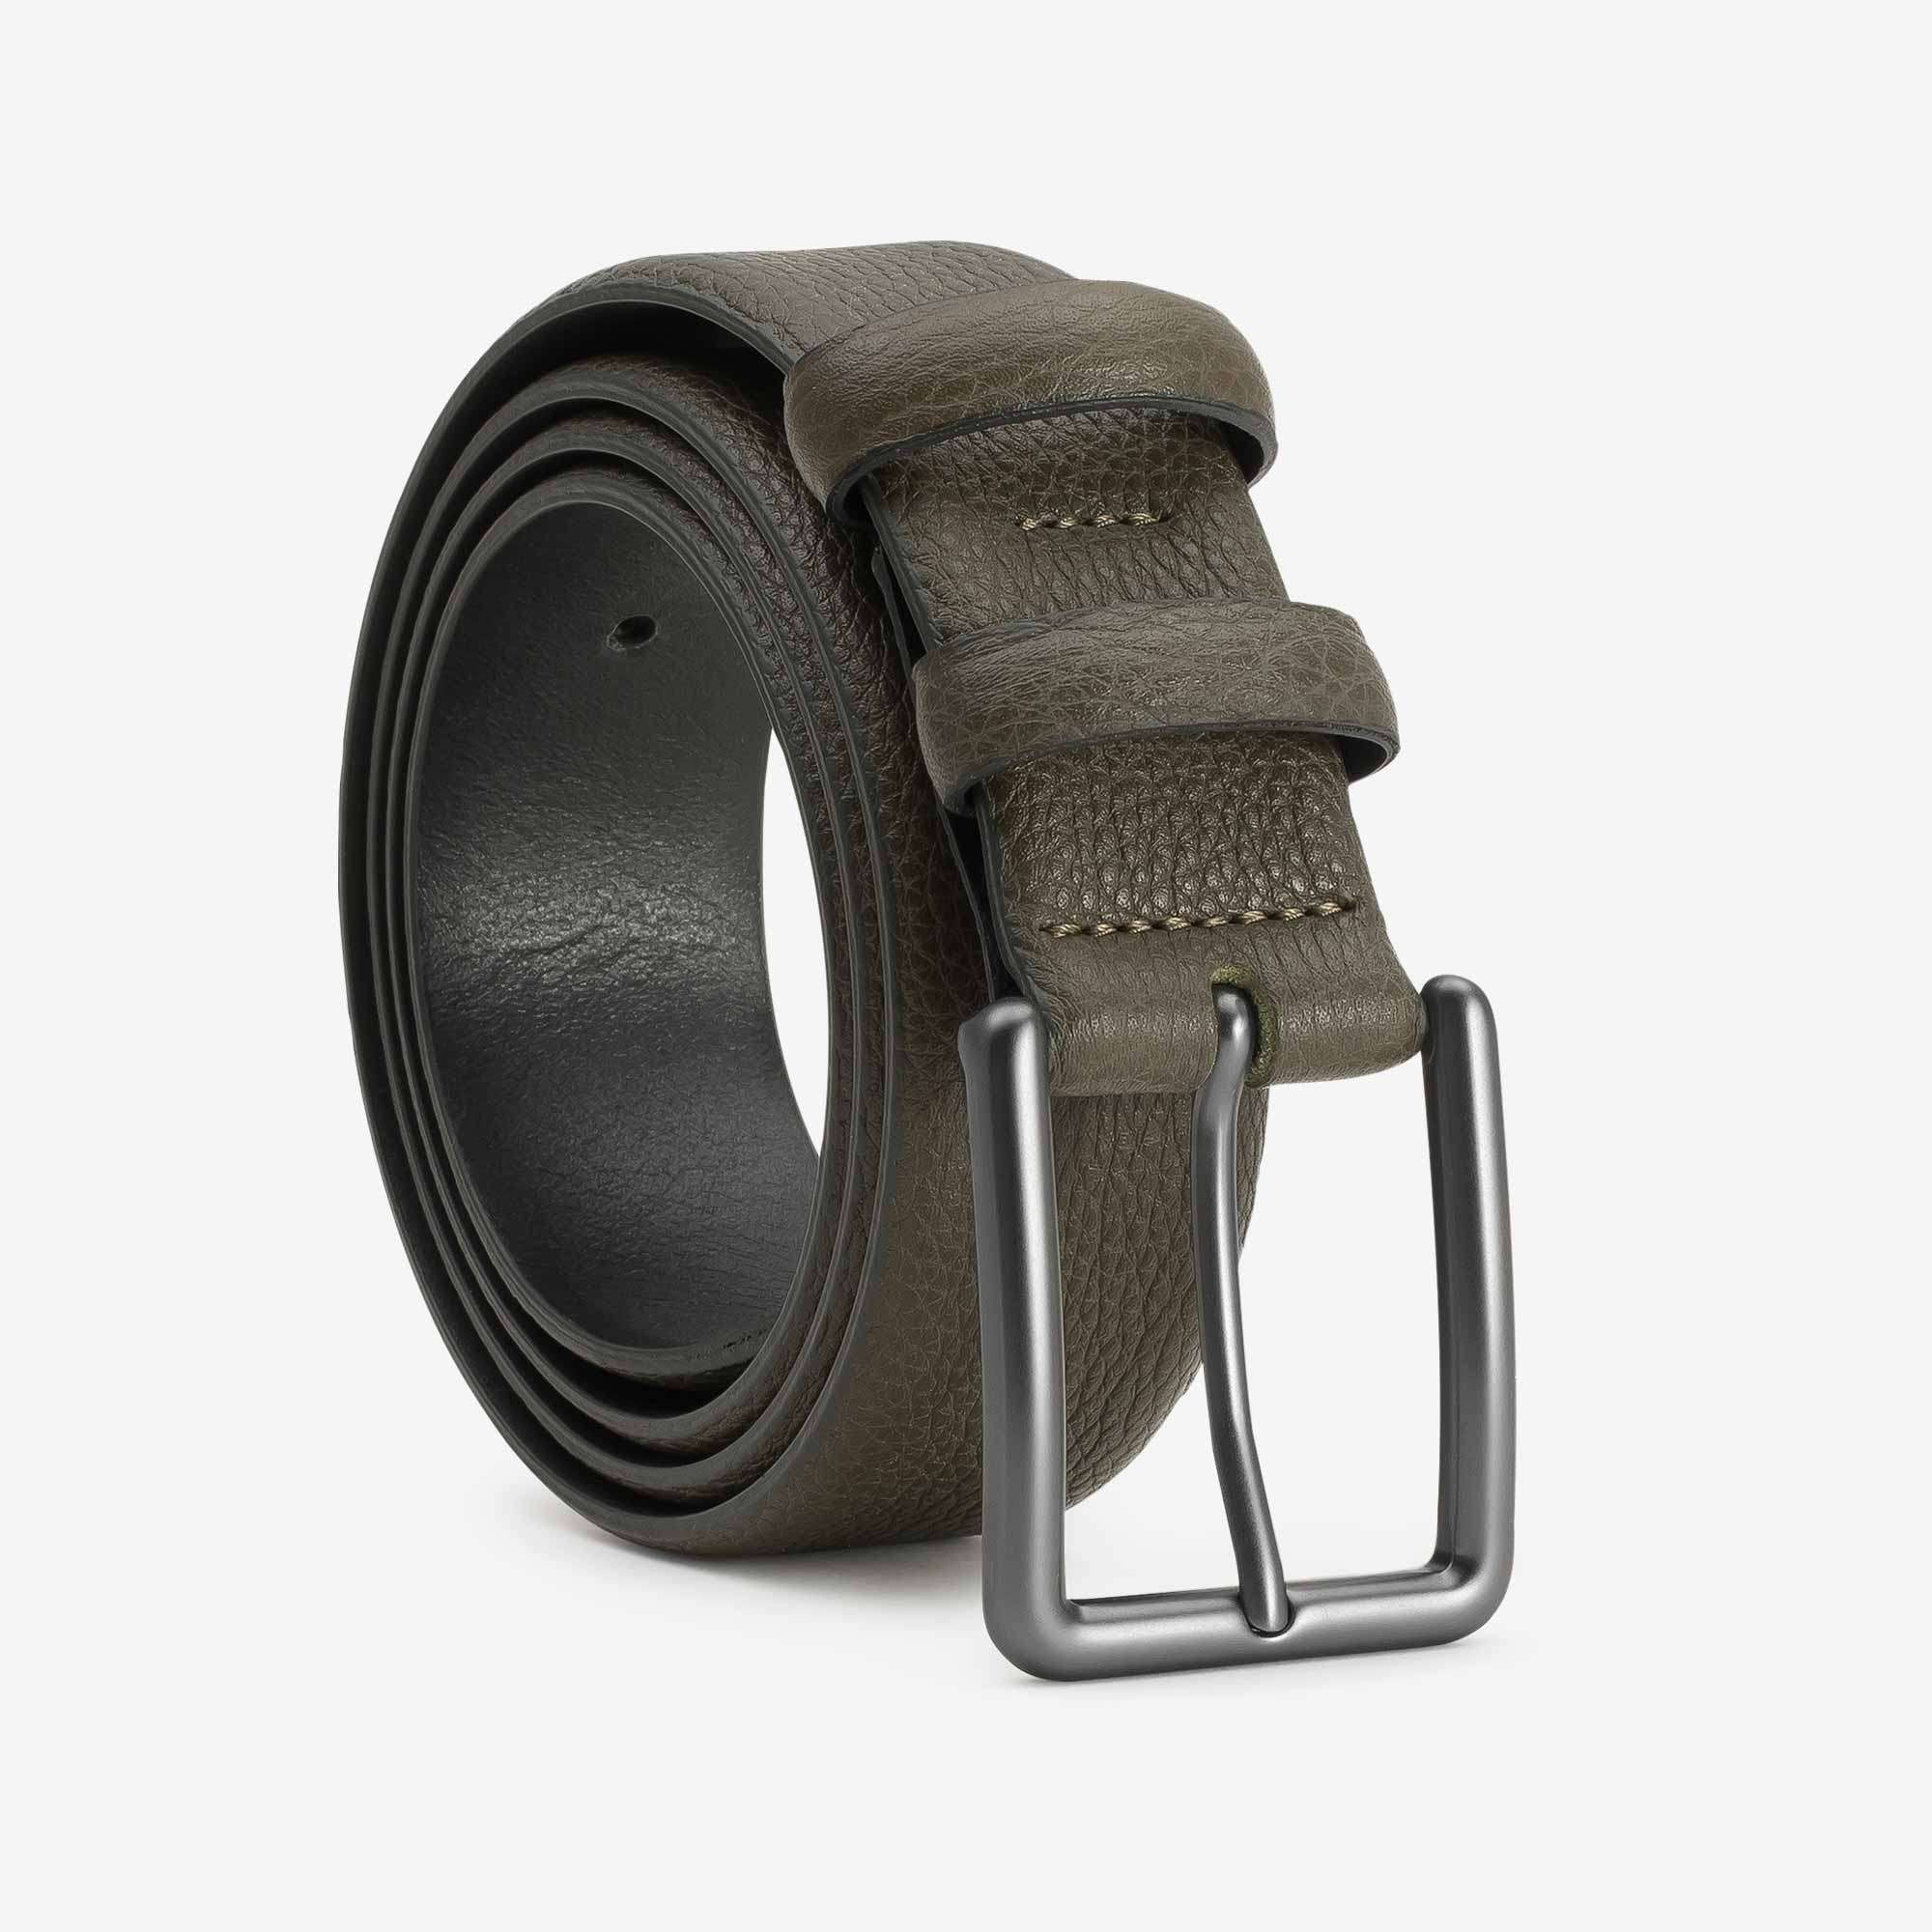 Martino Mens Belts Leather Belts For Men Belt for Jeans Dress Belt Classic Waist Belt With a Gift Box 